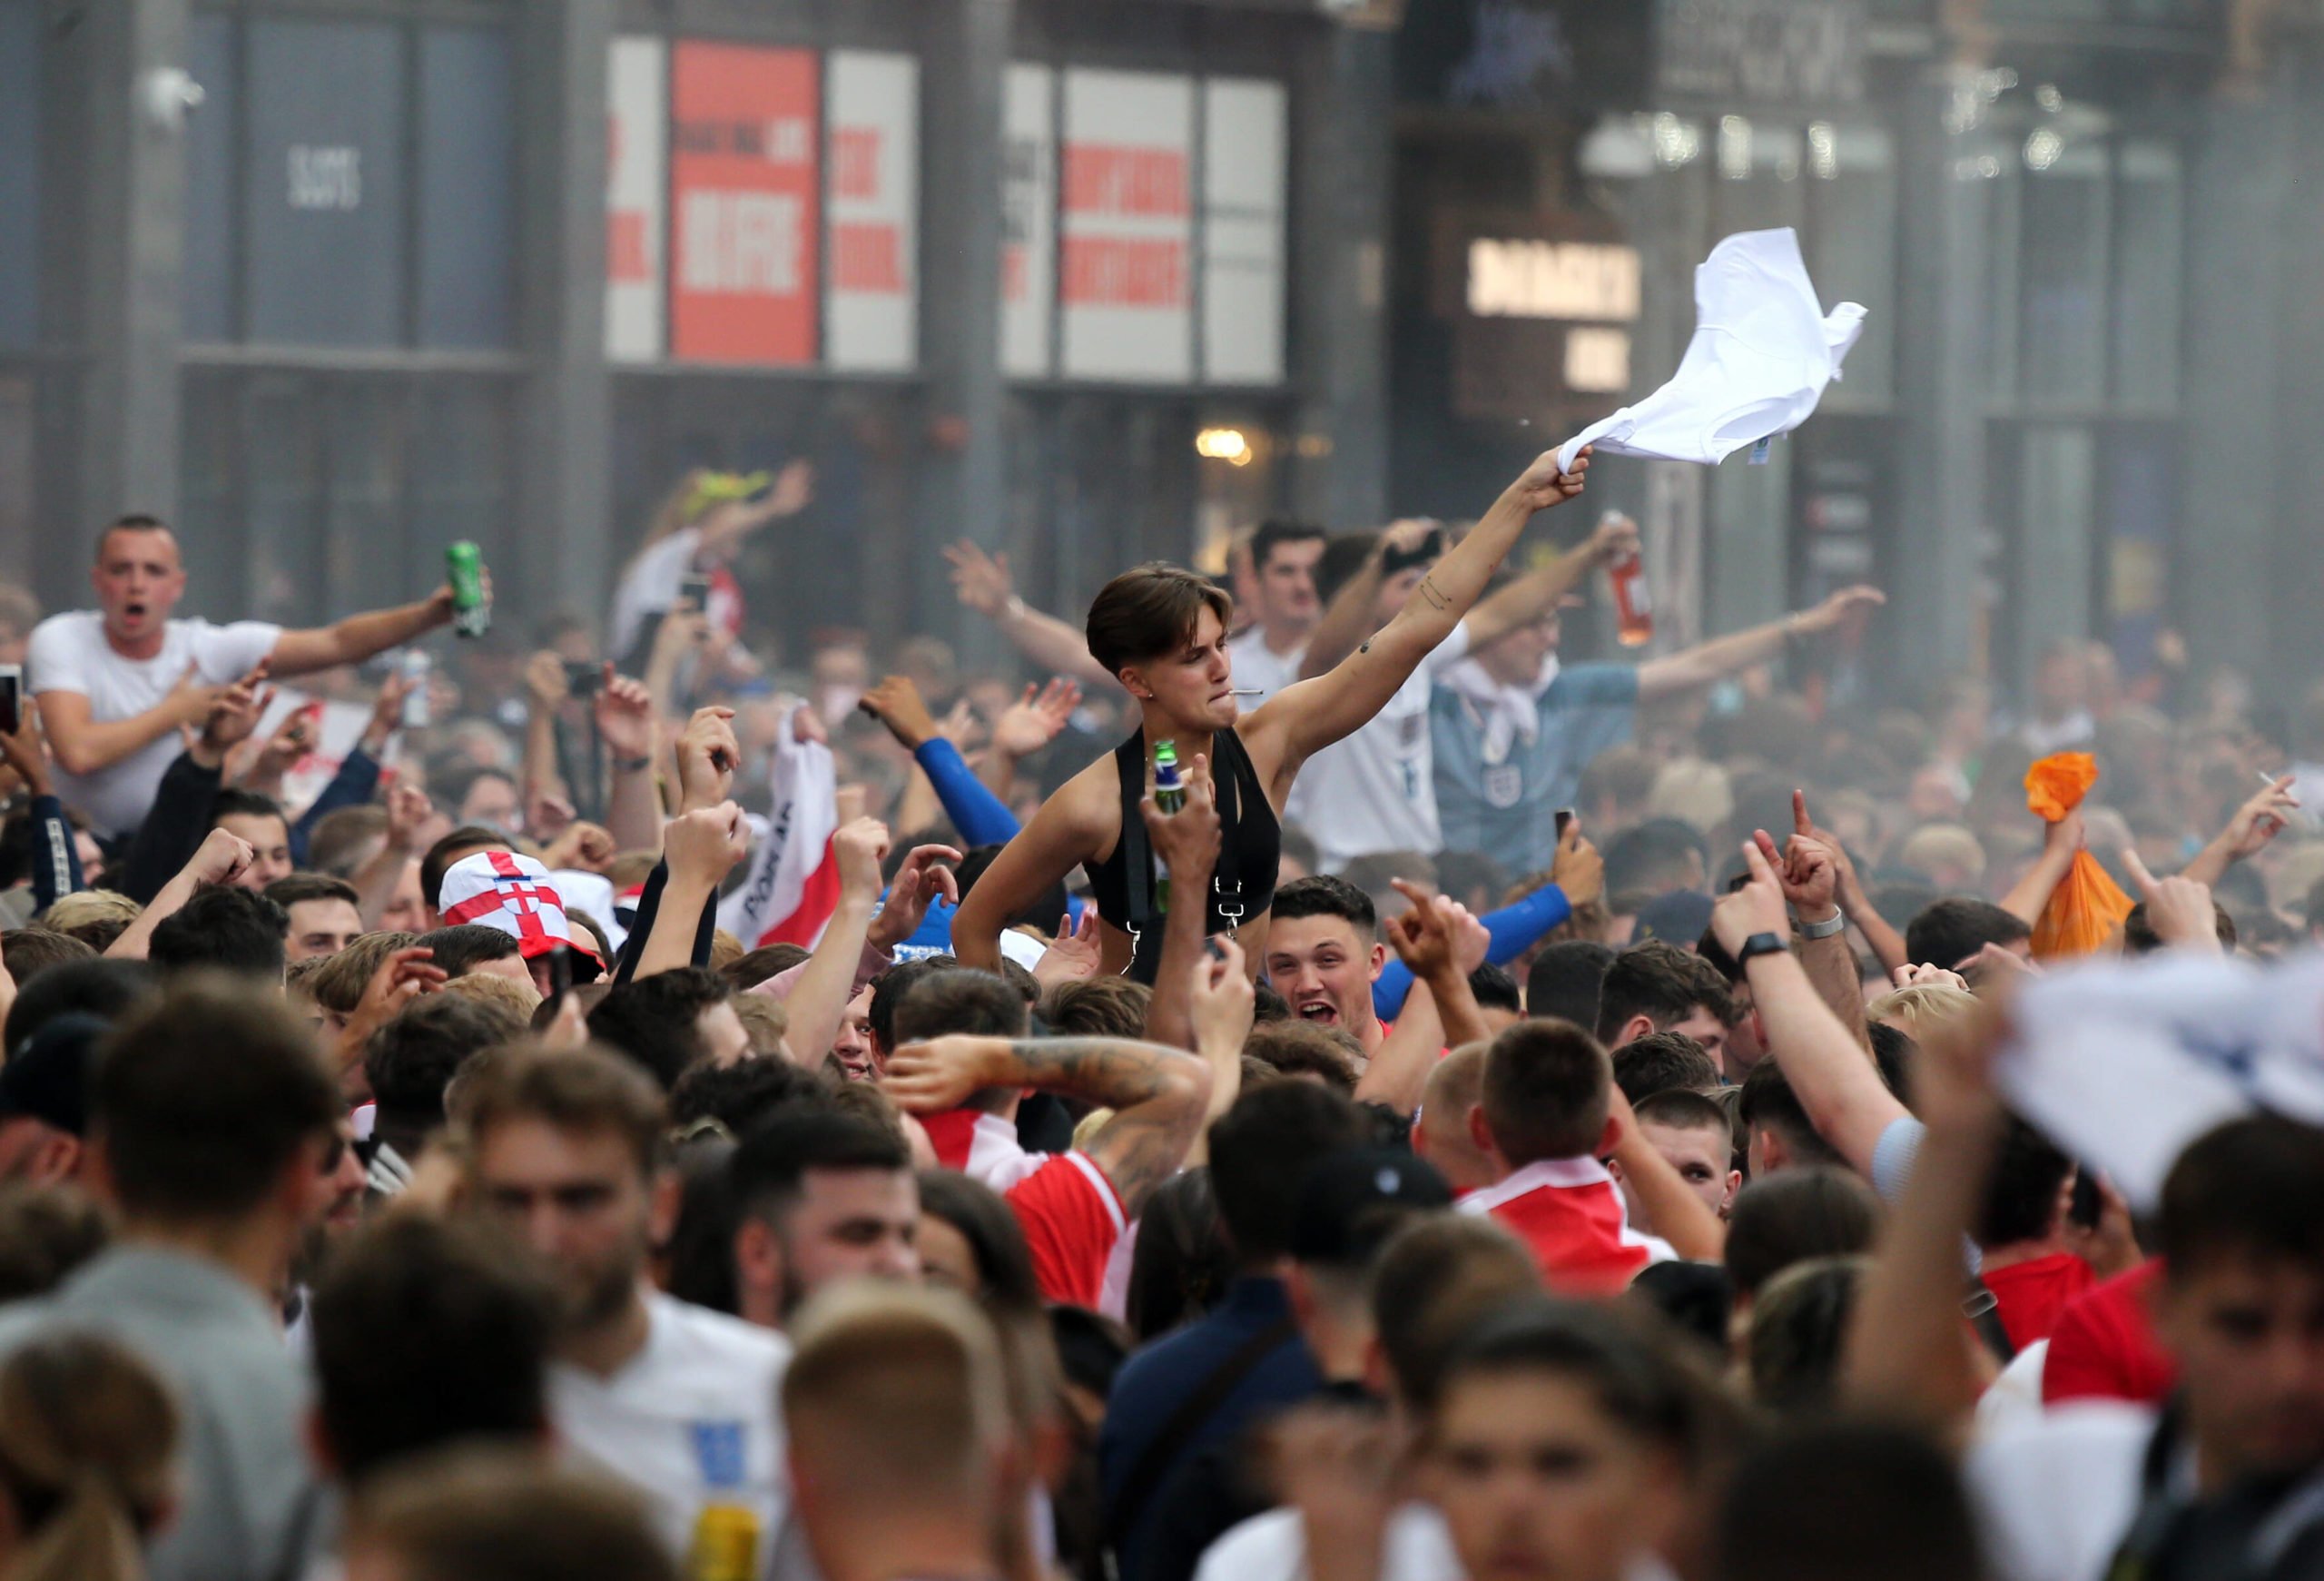 England fans gathered- Shock at the disturbances outside Wembley Stadium